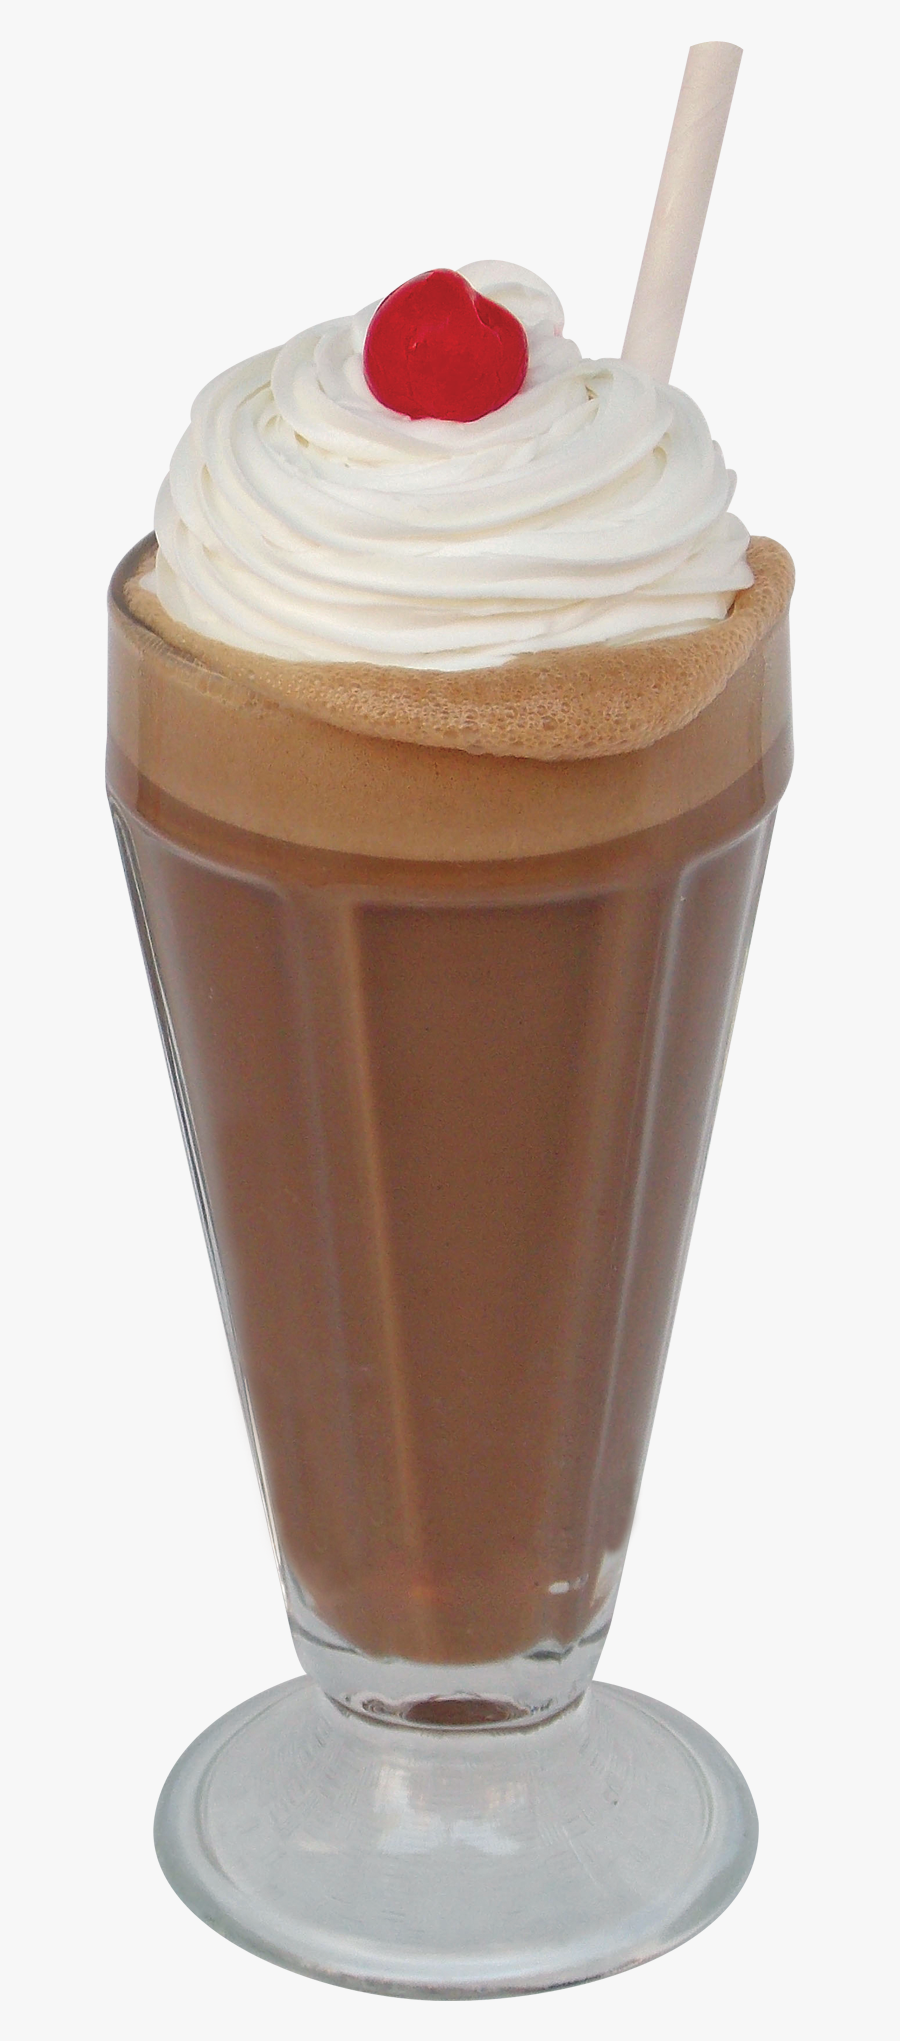 Malt Clipart Chocolate Milkshake - Chocolate Milkshake Clipart, Transparent Clipart